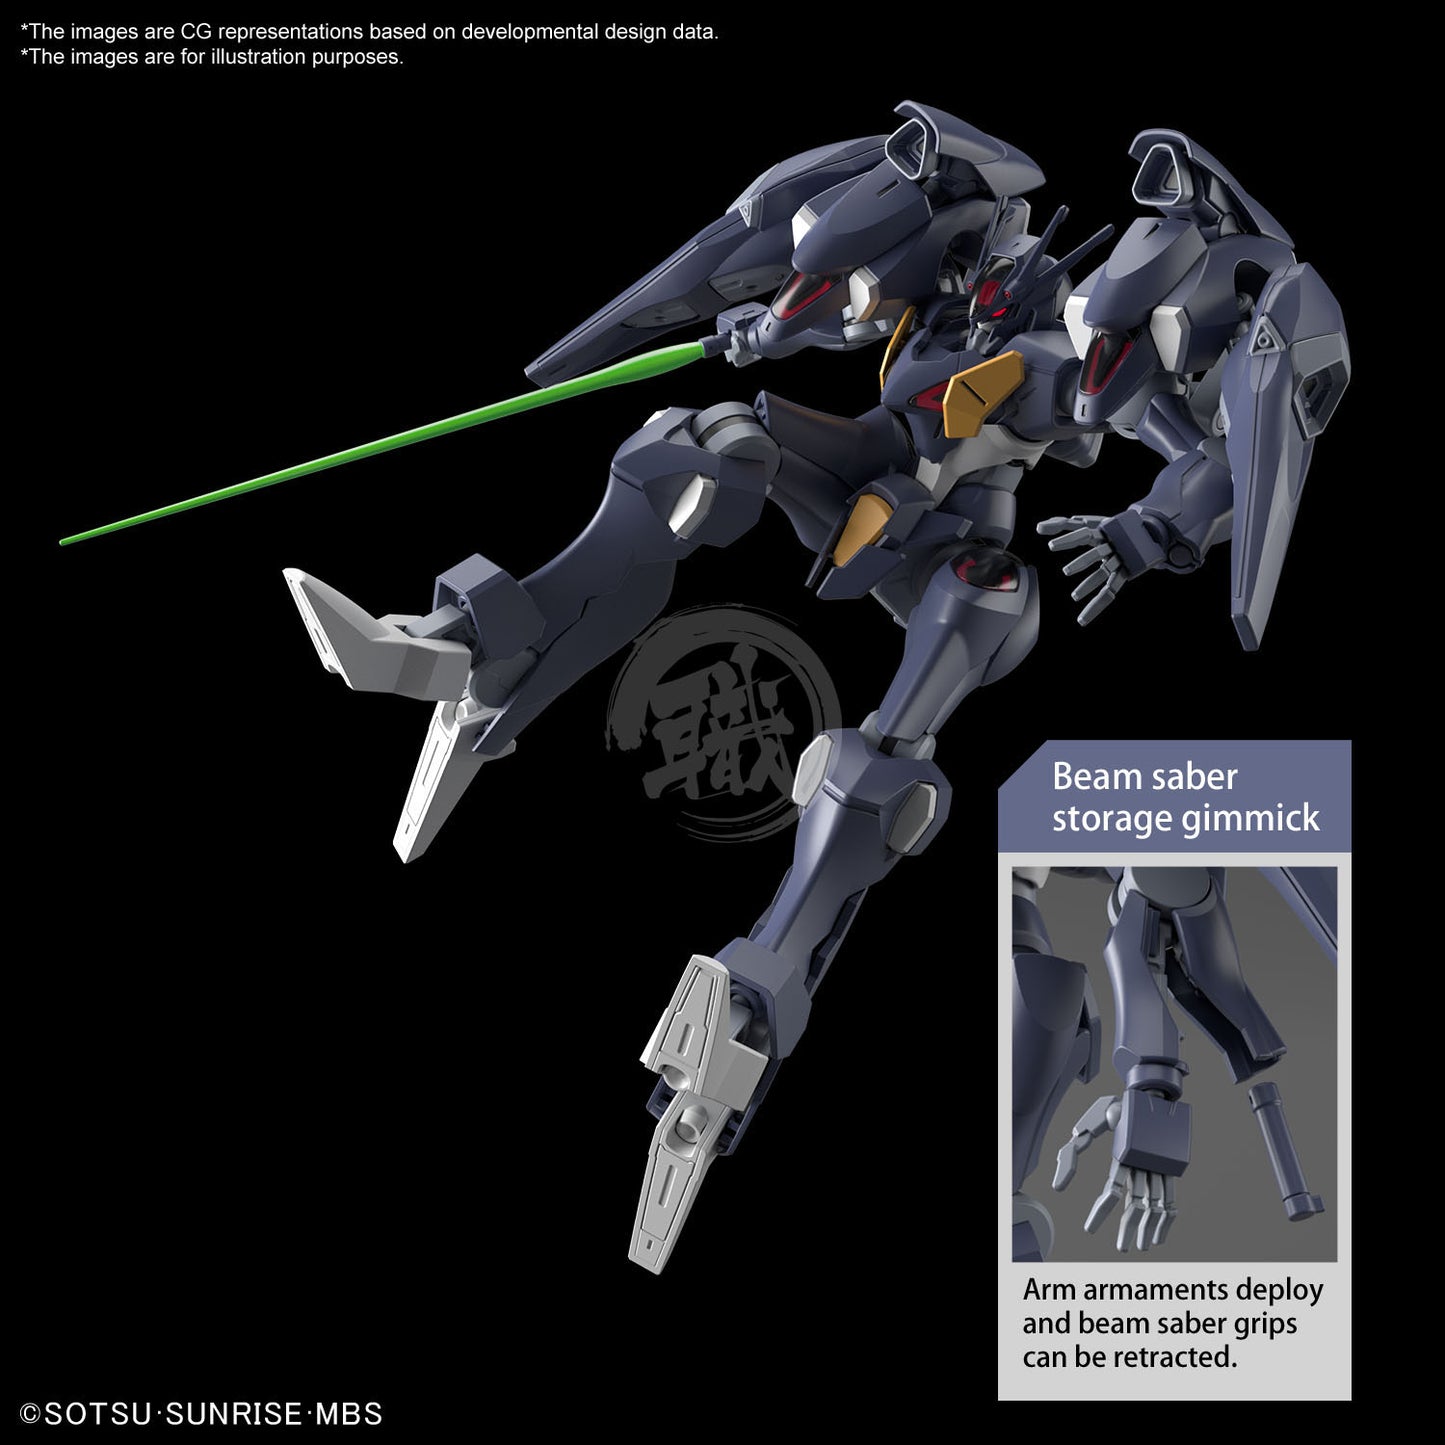 HG Gundam Pharact - ShokuninGunpla